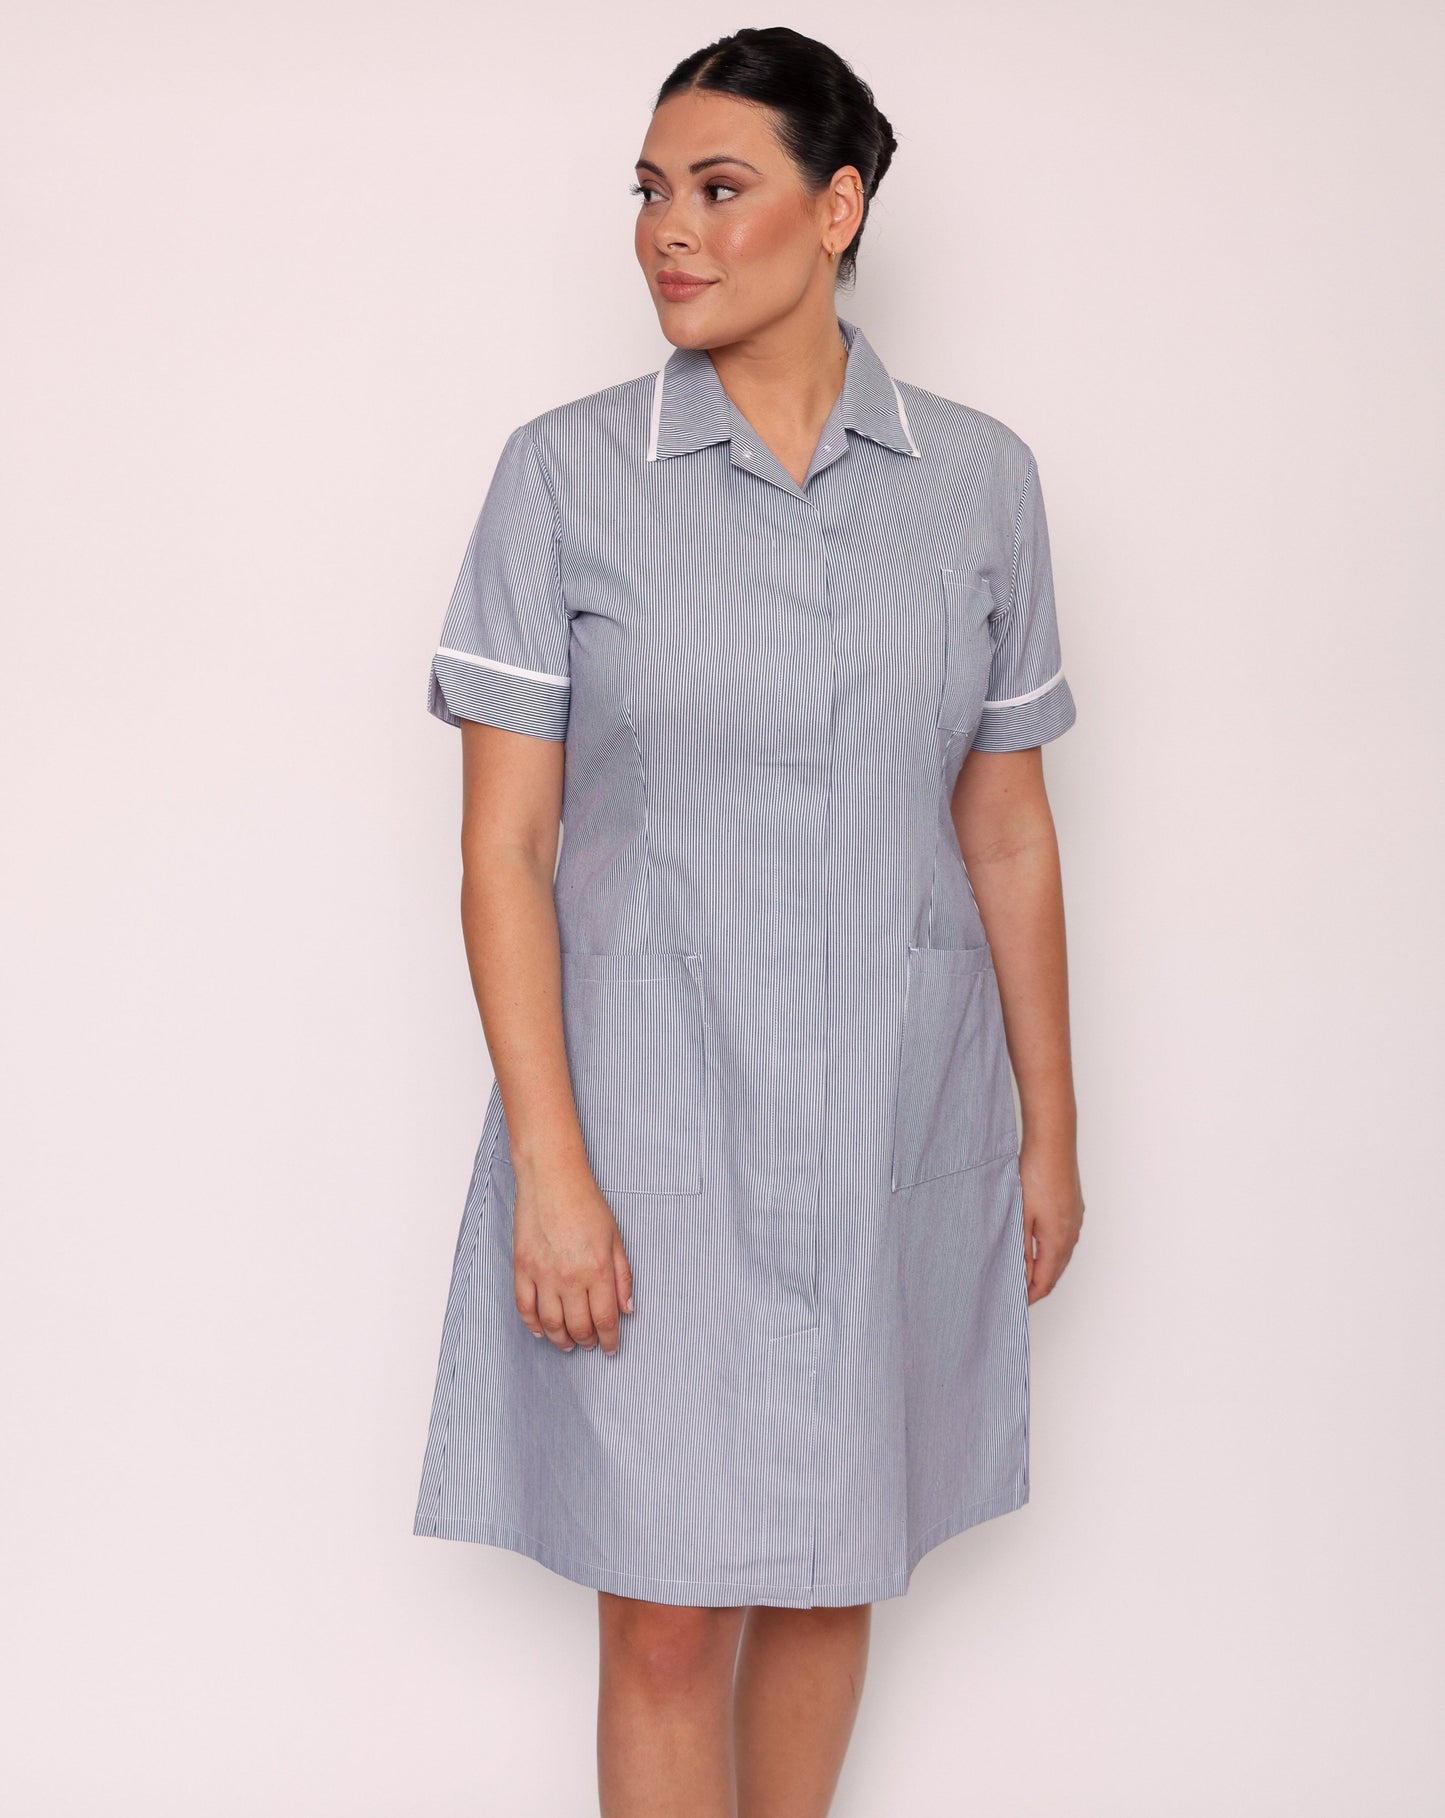 Nurse Stripe Stud Dress